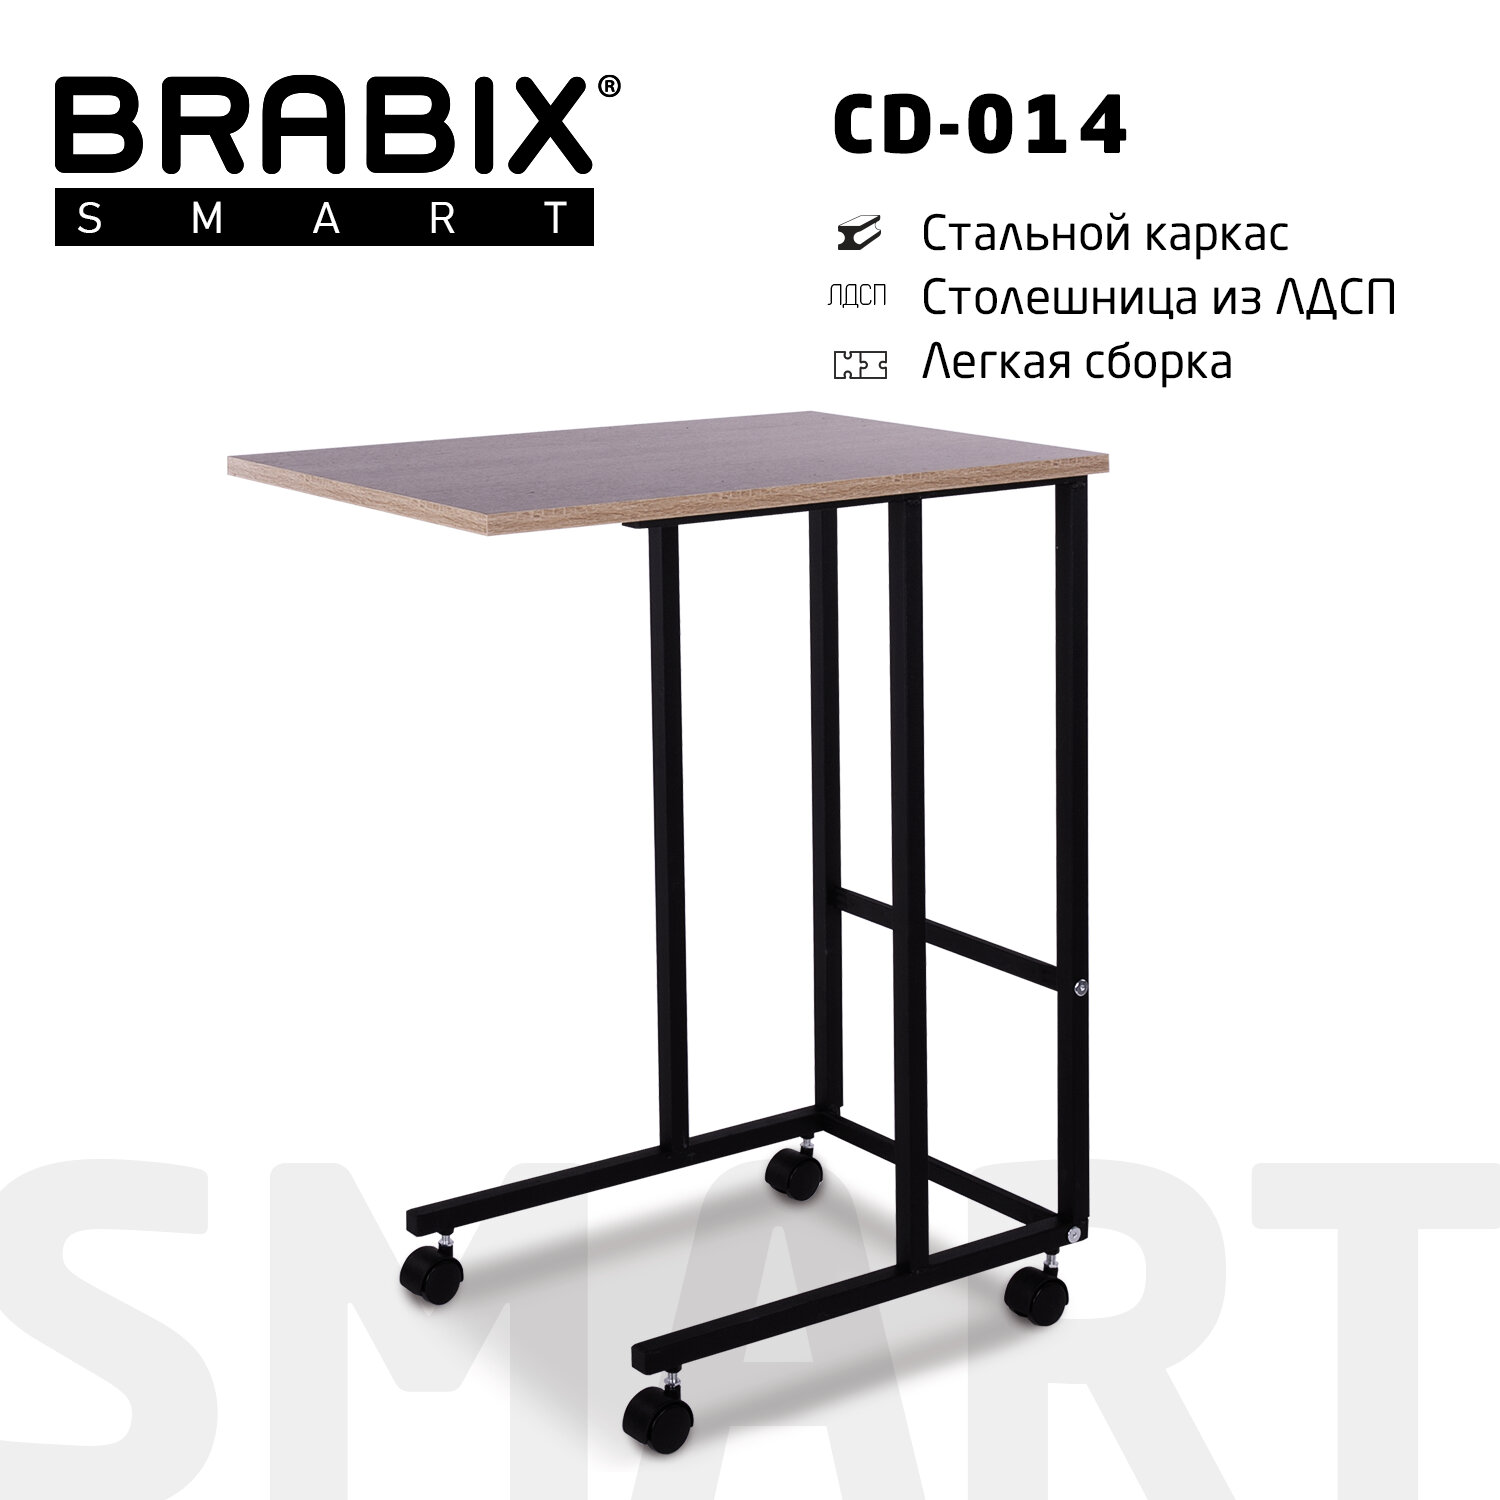 Brabix  BRABIX Smart CD-014 641884